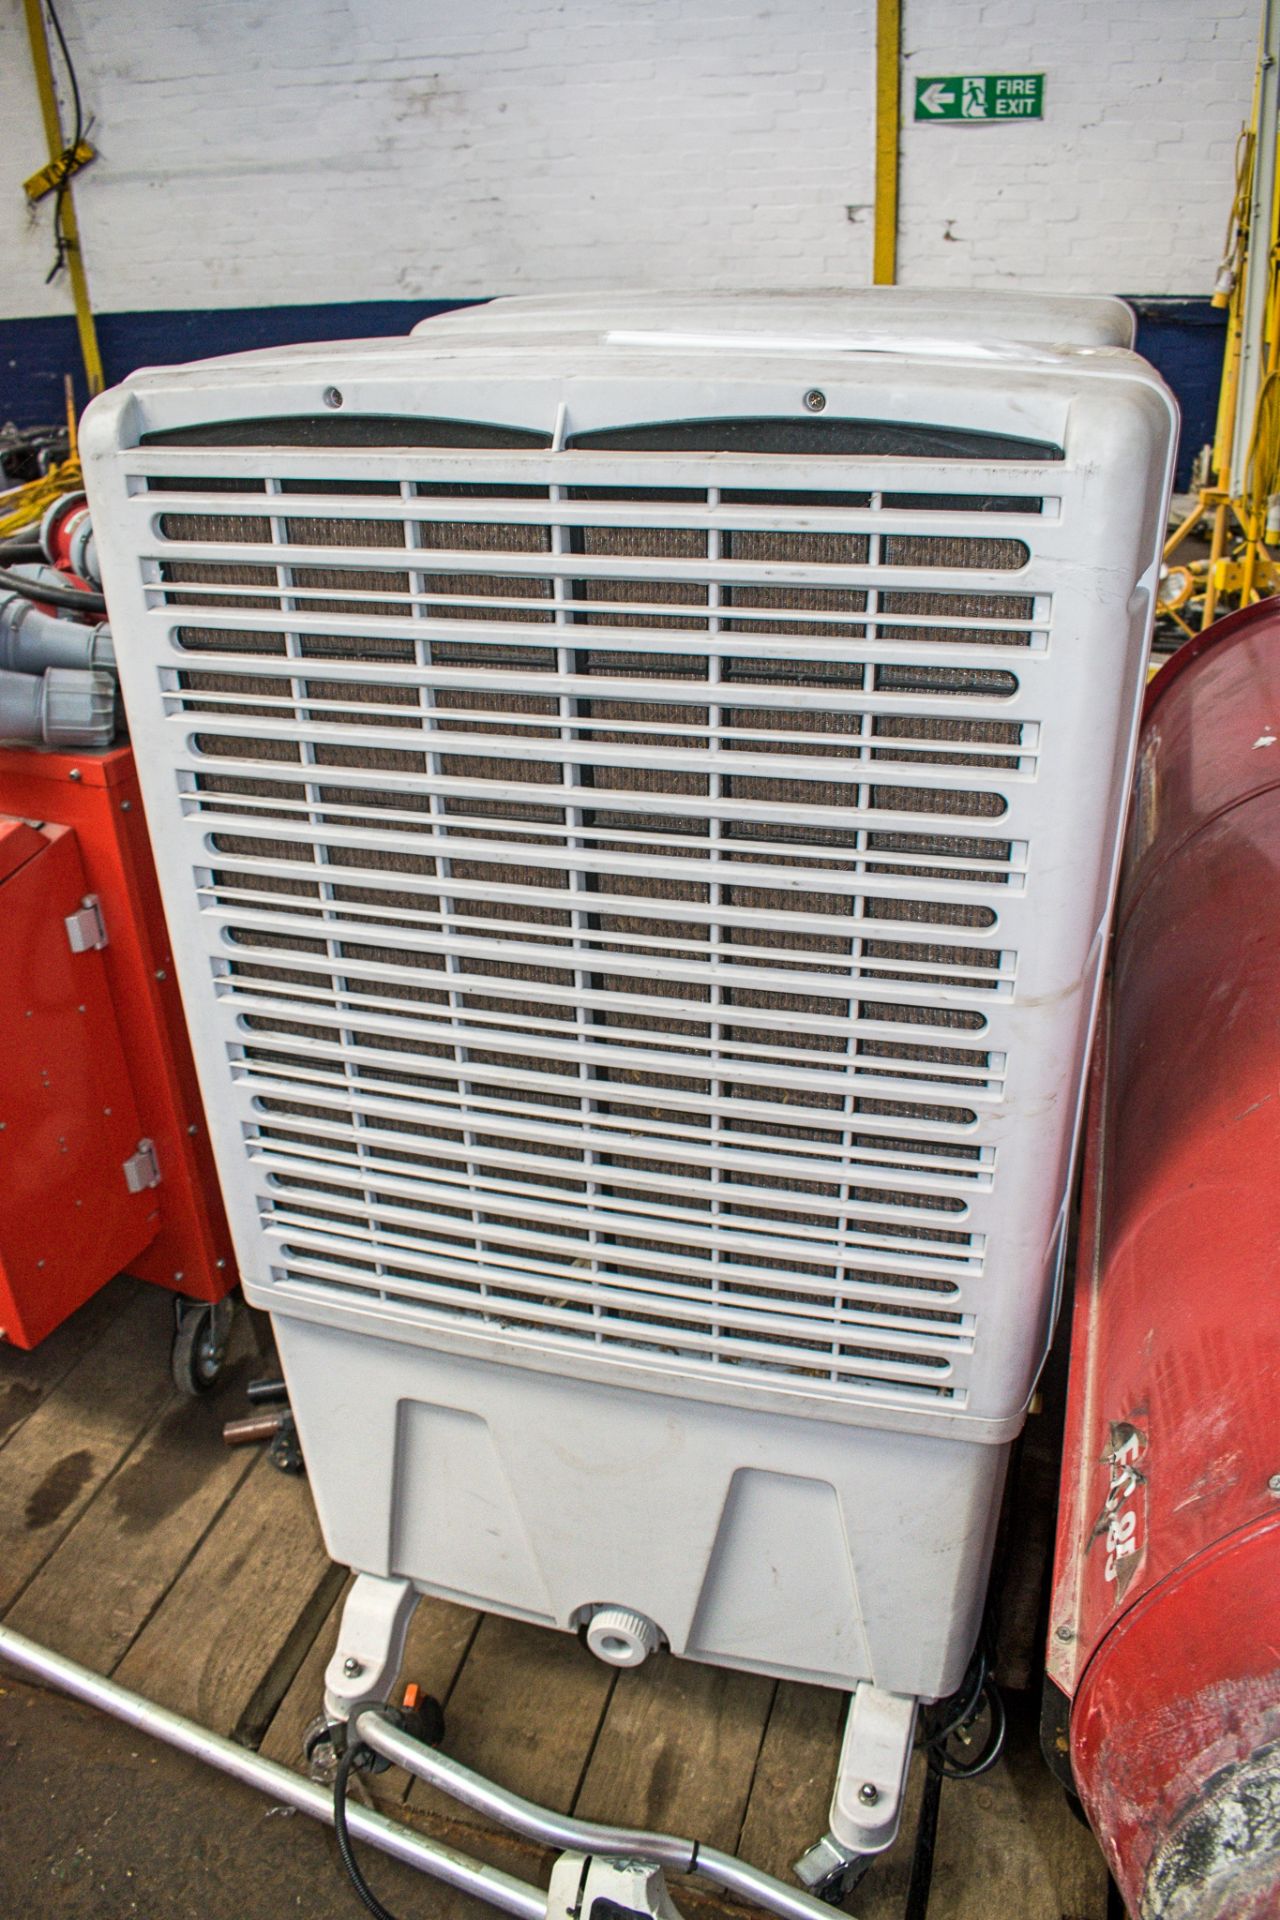 2 - Master 240v evaporative coolers A649824/825 - Image 2 of 2